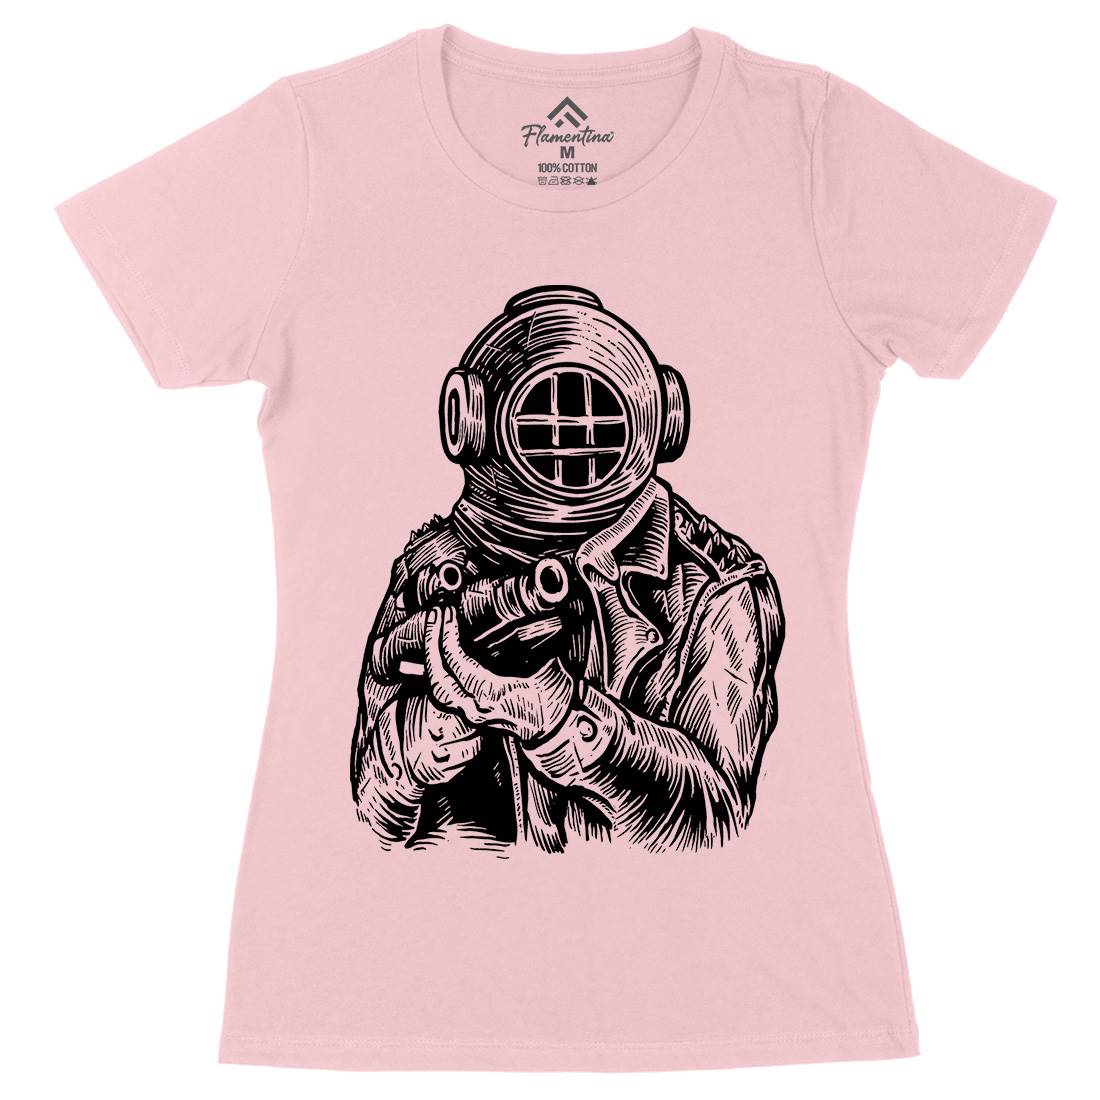 Diver Soldier Womens Organic Crew Neck T-Shirt Navy A526